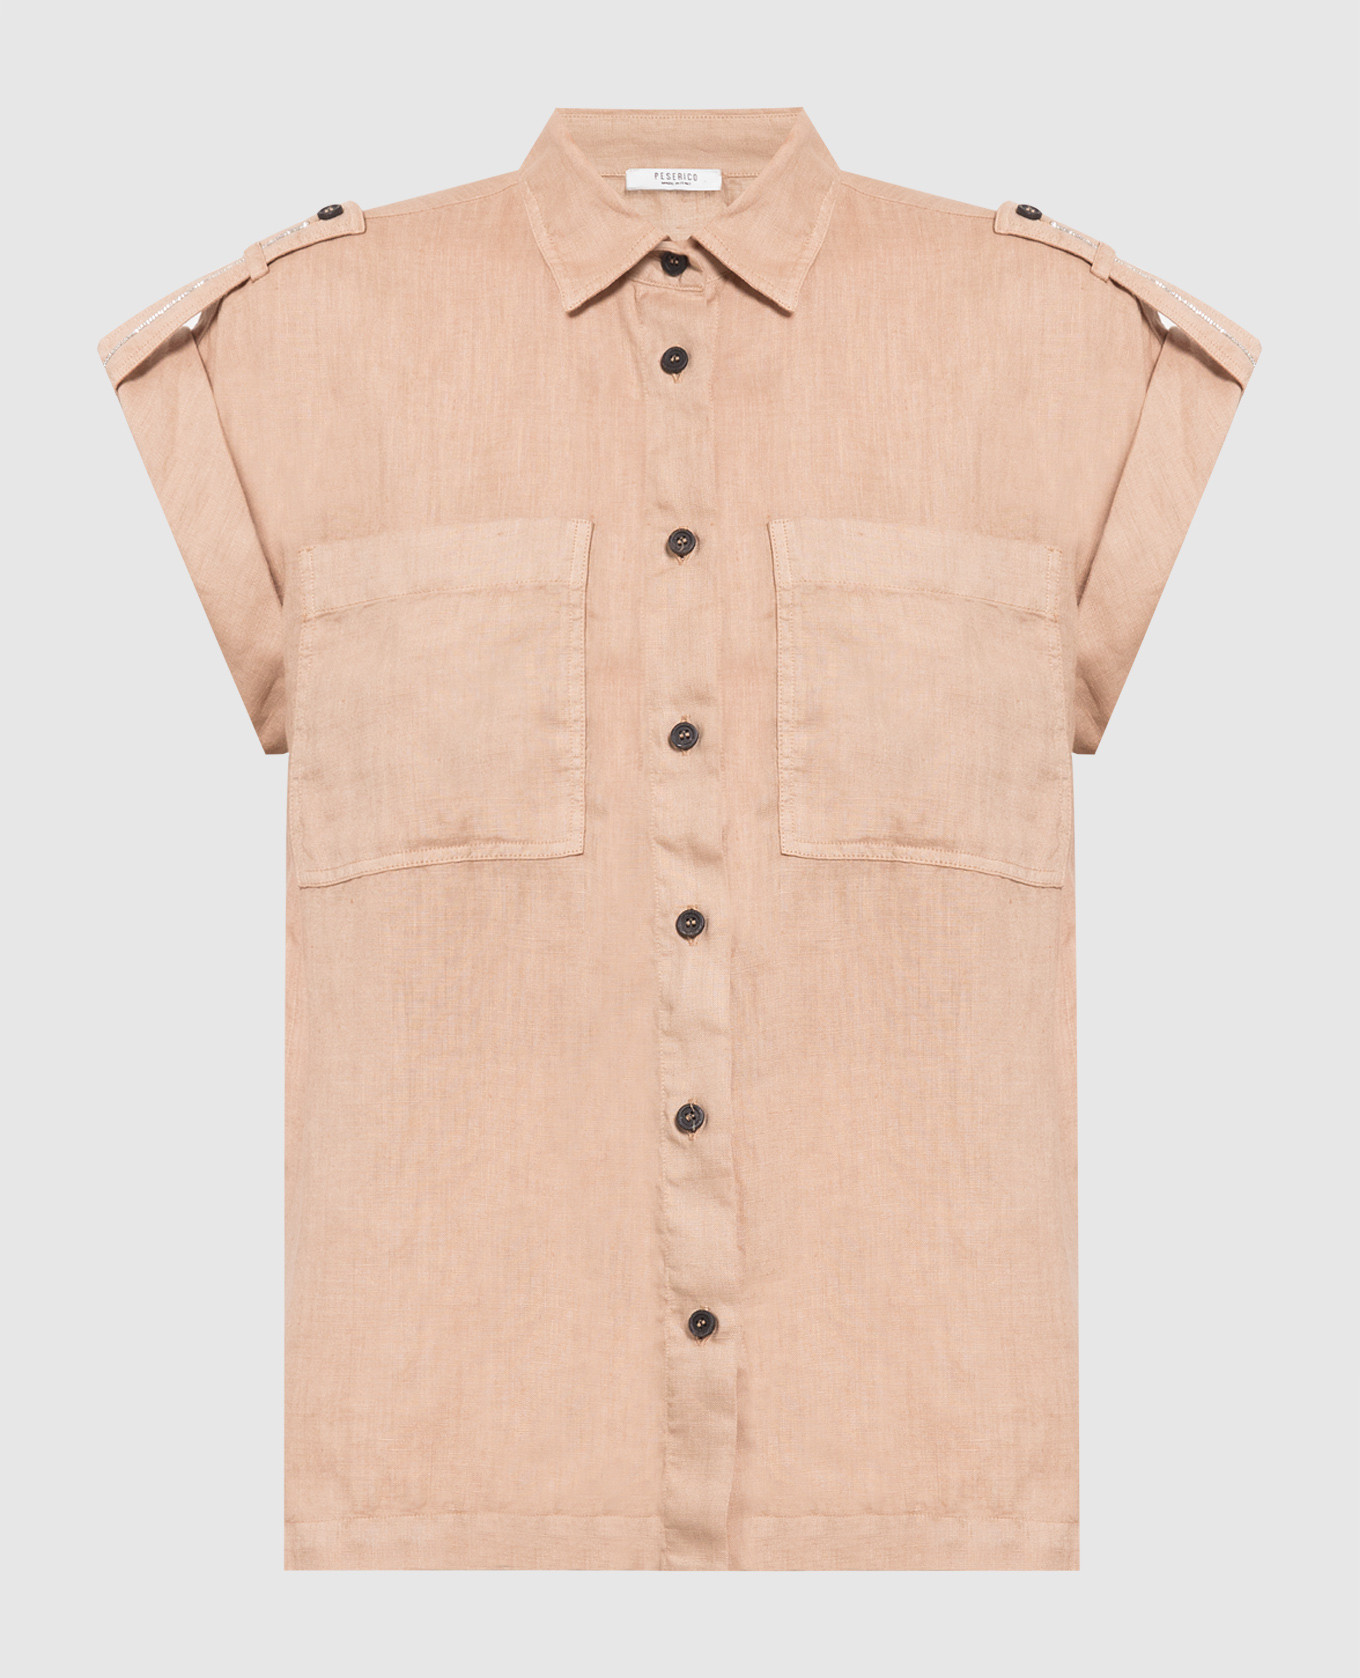 Brown linen shirt with monil chain